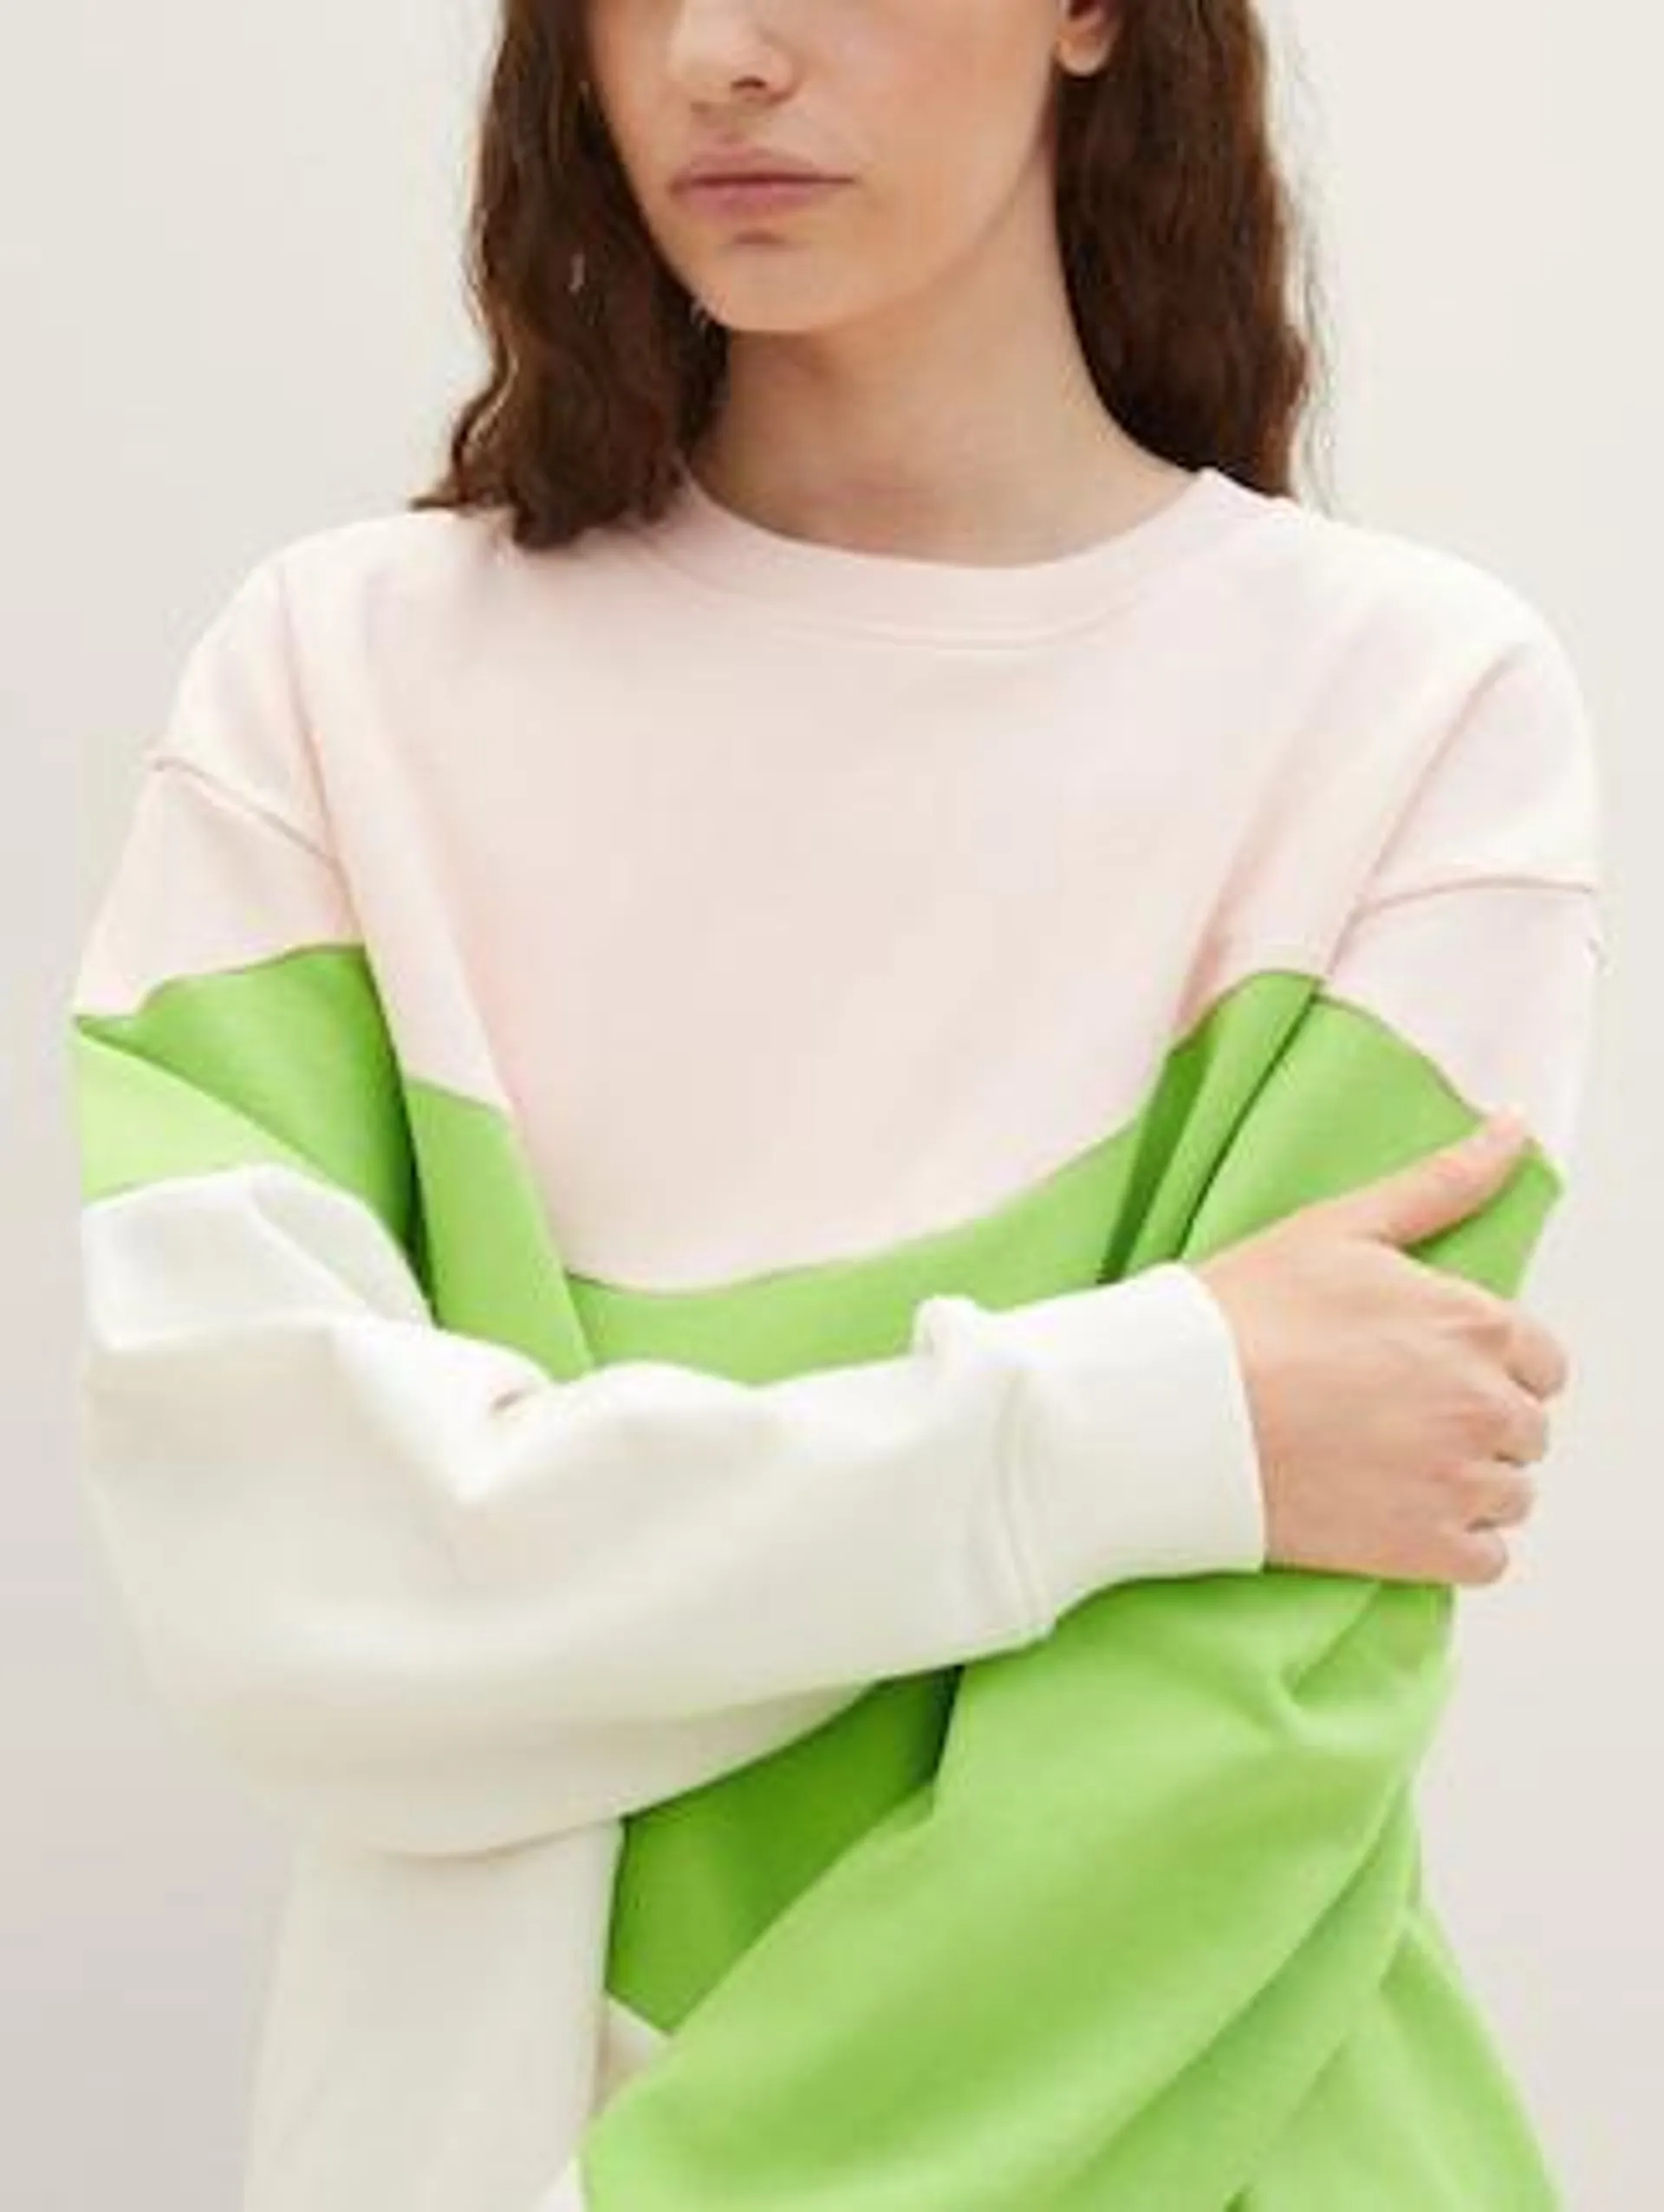 Sweatshirt with colour blocking